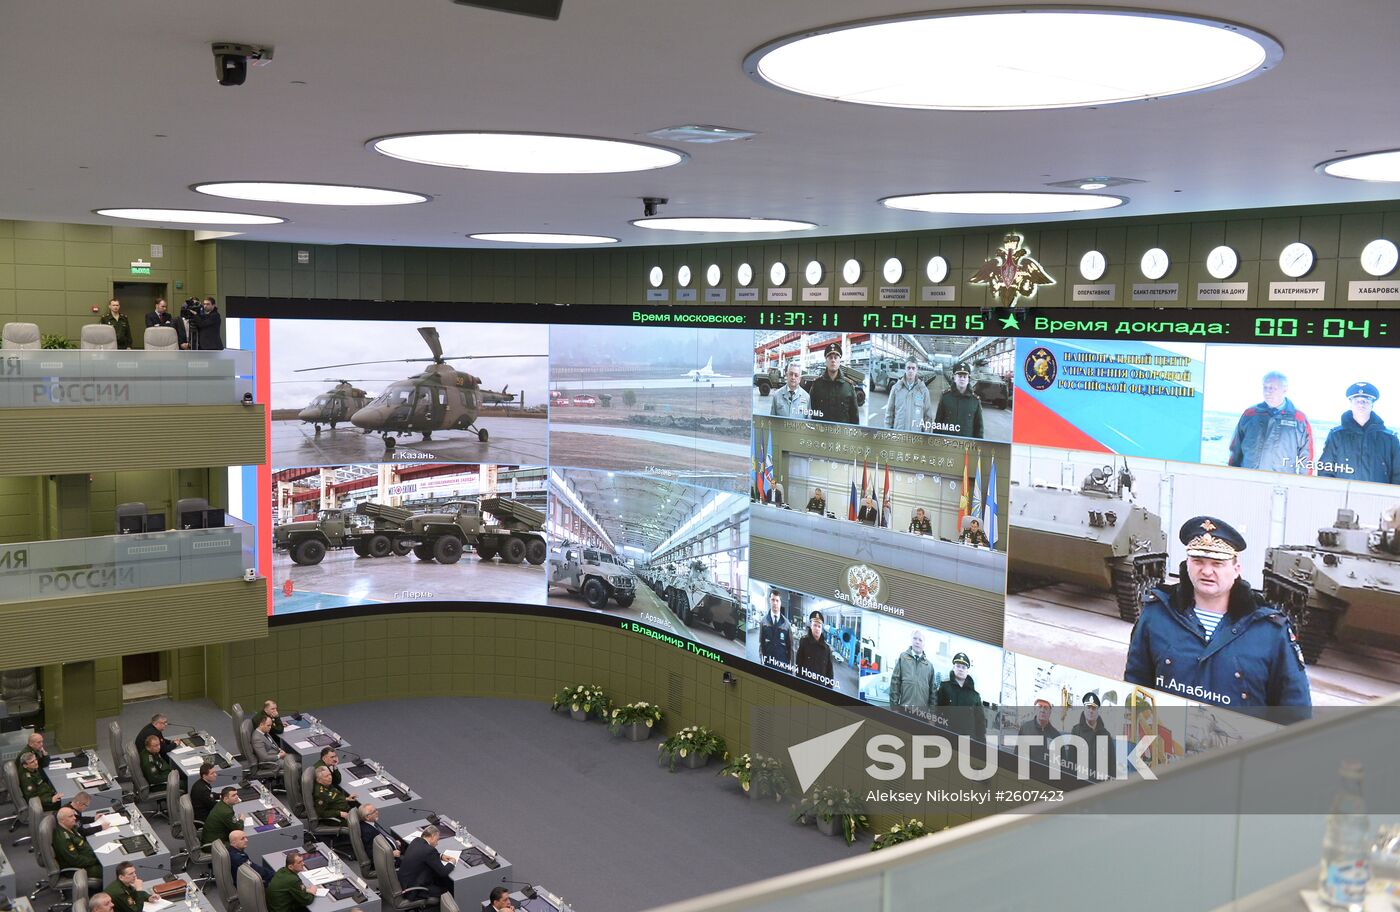 President Putin visits National Defense Control Center